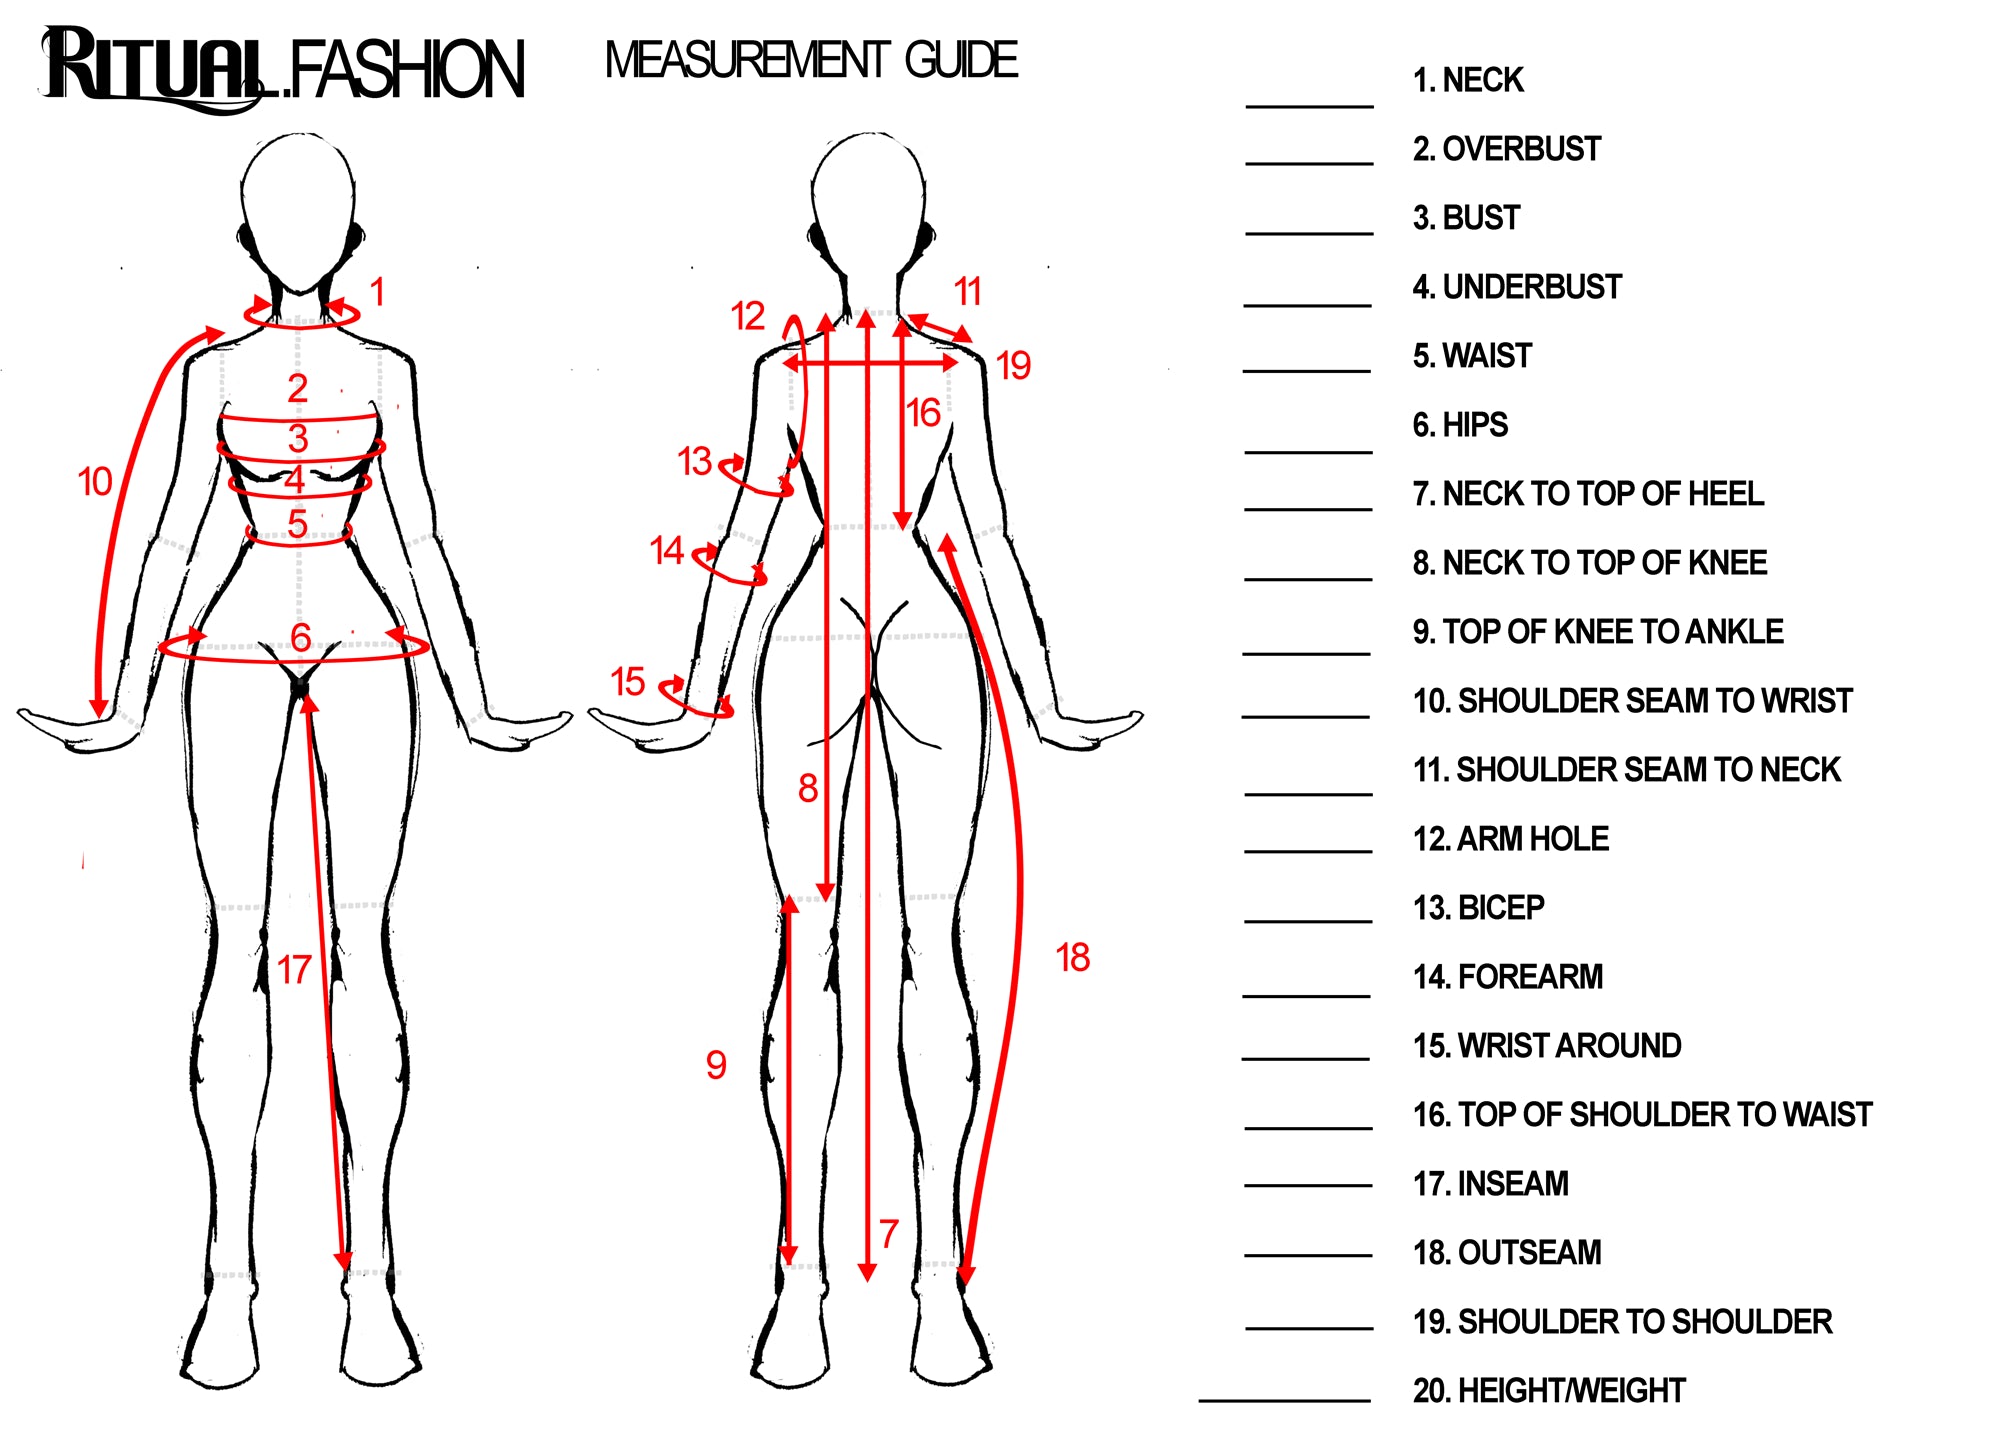 dress measurements guide